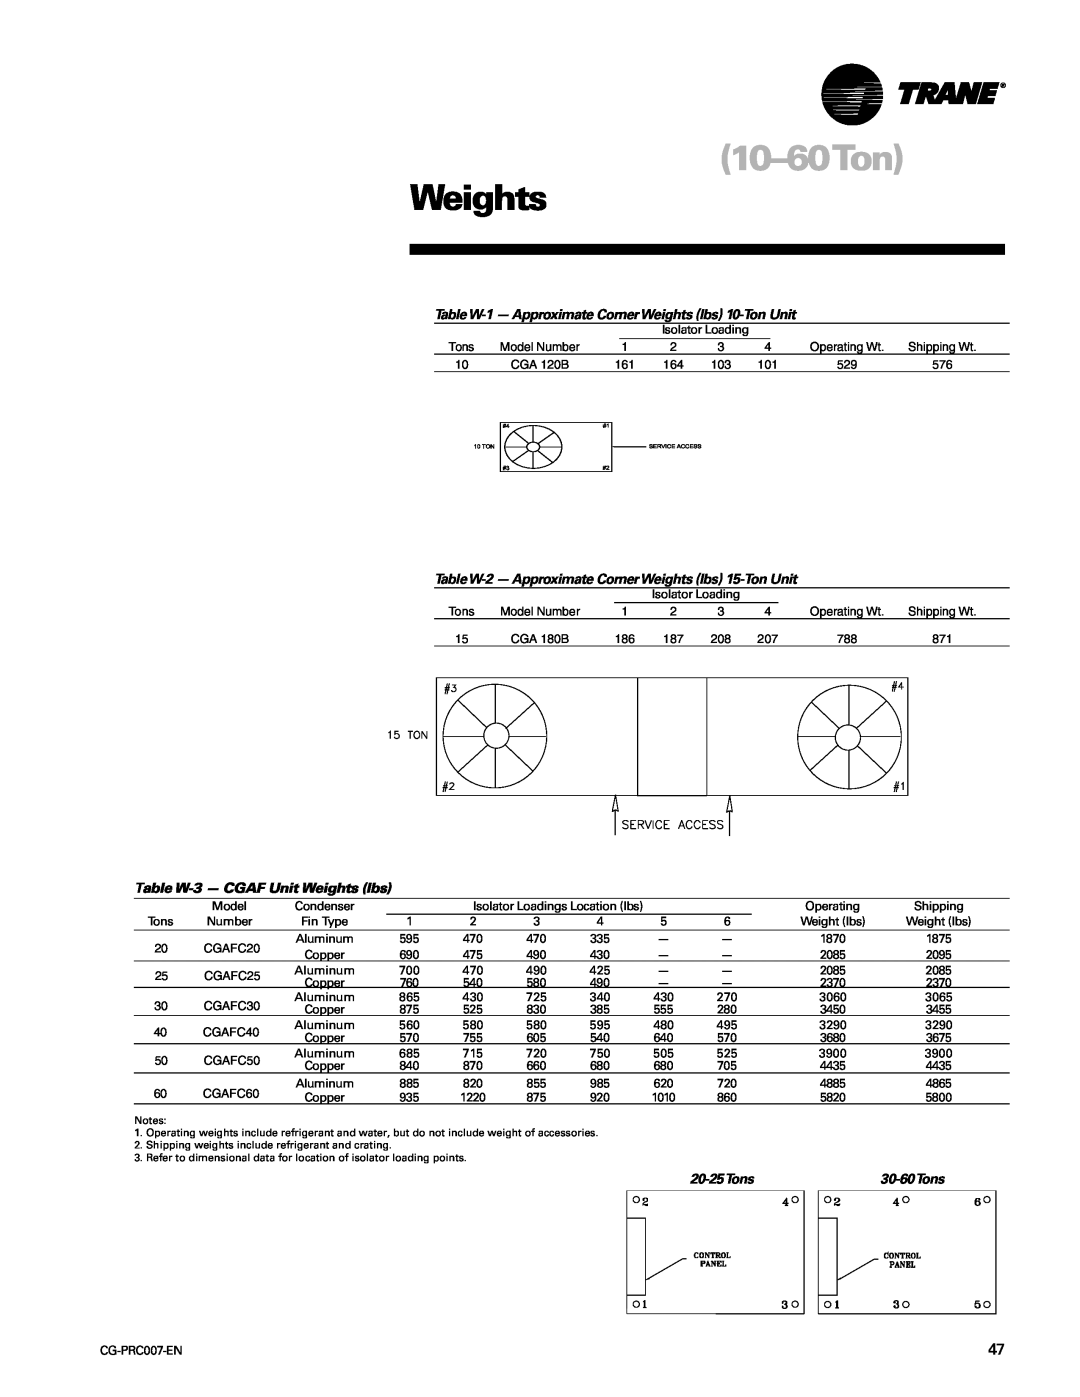 Trane CG-PRC007-EN manual 10-60Ton, Table W-3- CGAF Unit Weights lbs, 20-25Tons30-60Tons 